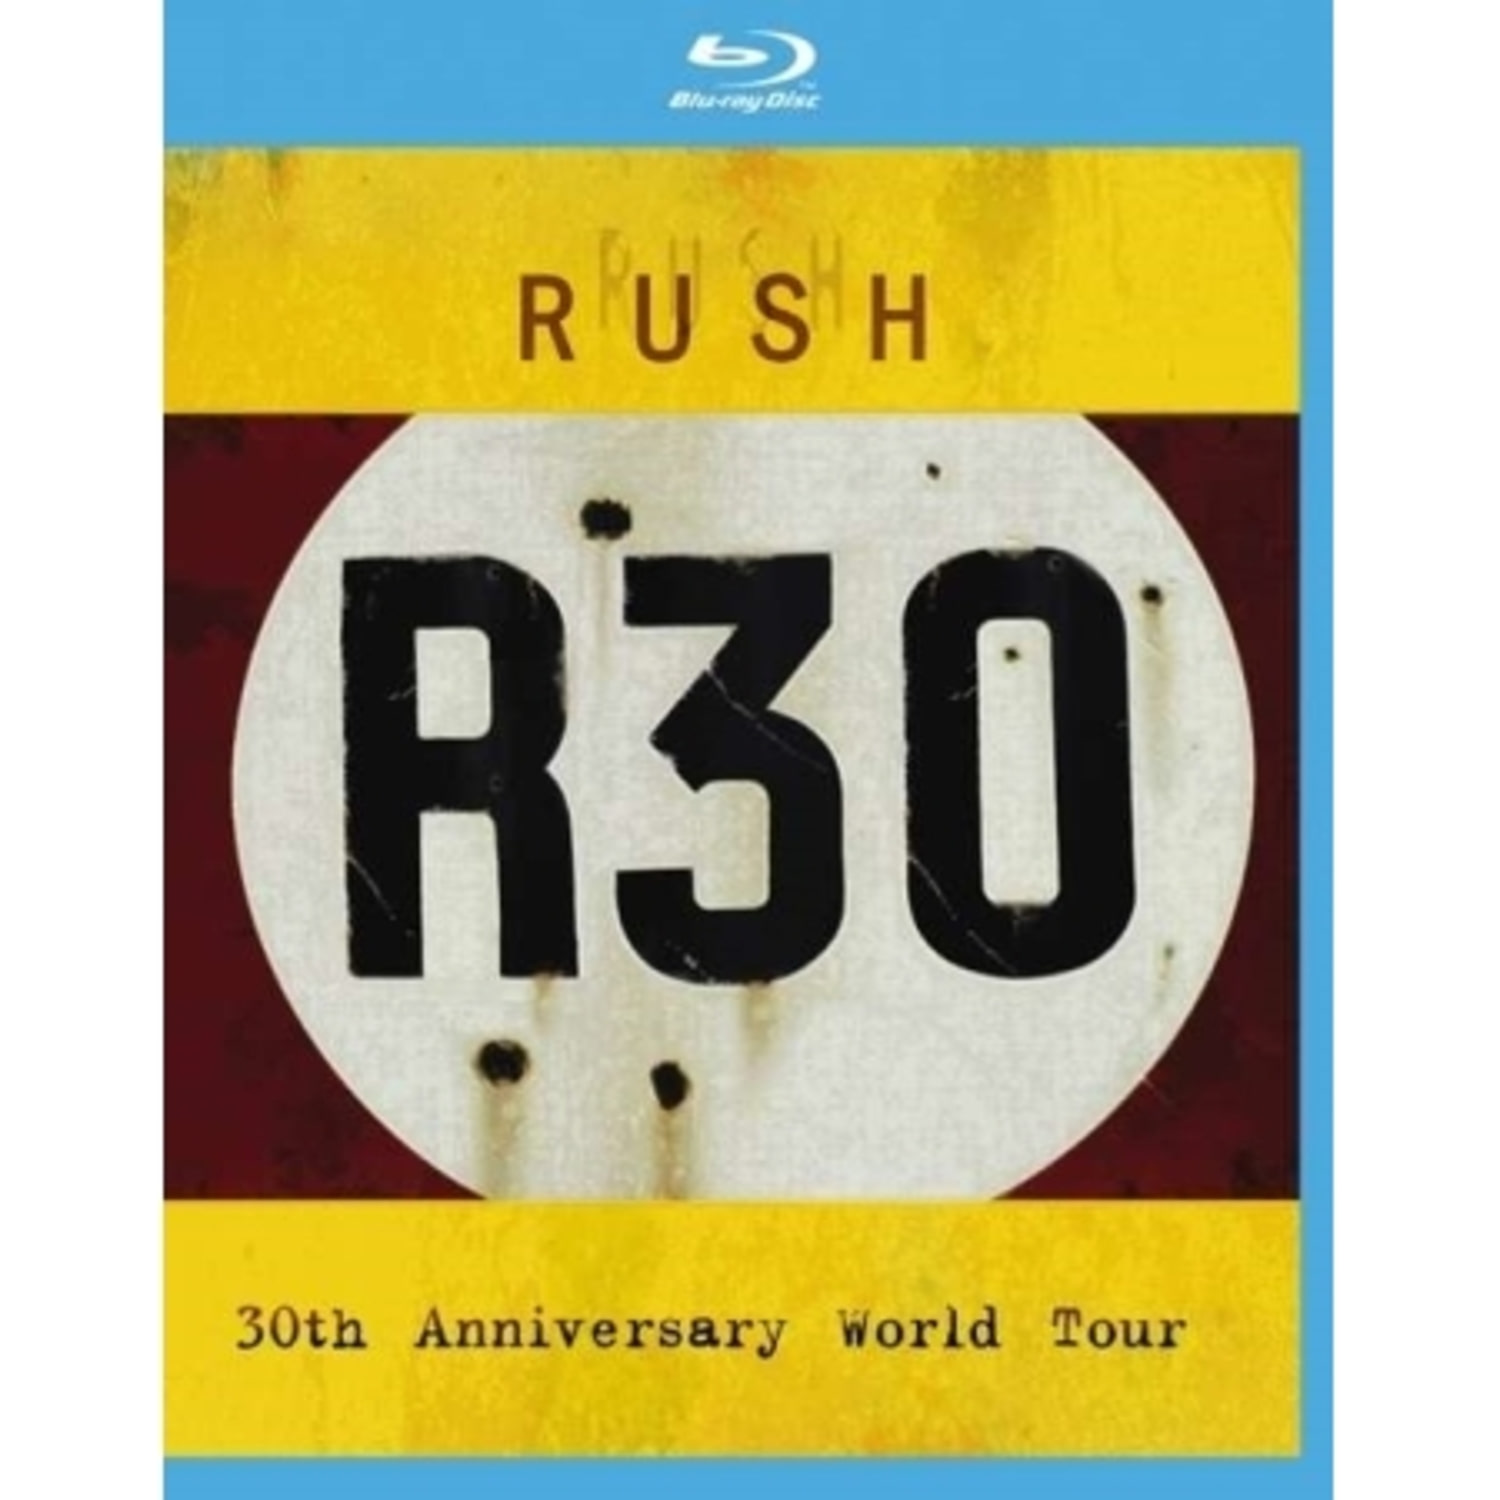 RUSH - R30: 30TH ANNIVERSARY WORLD TOUR  (1 DISC)